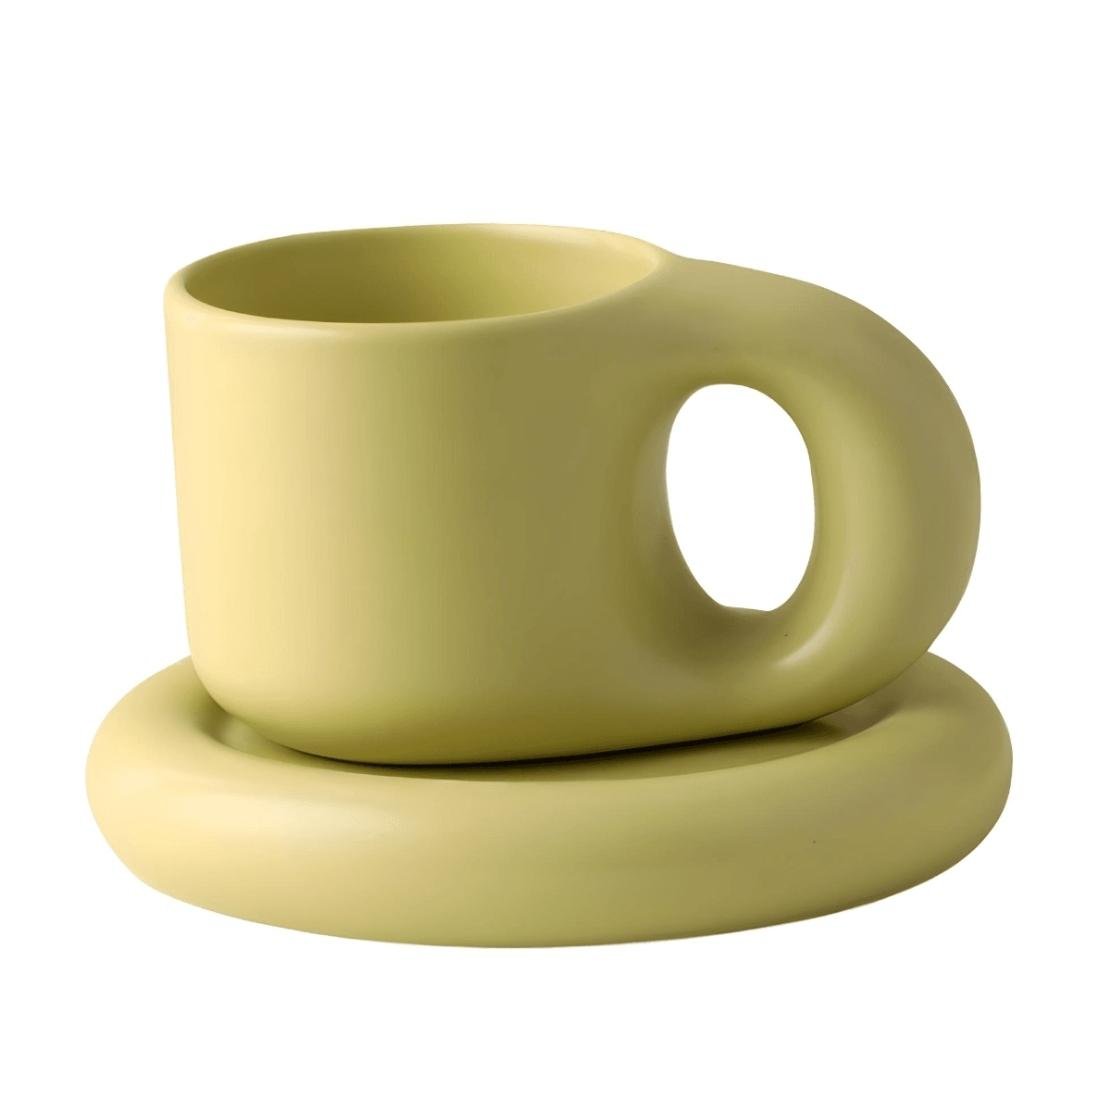 Green chunky ceramic mug and saucer